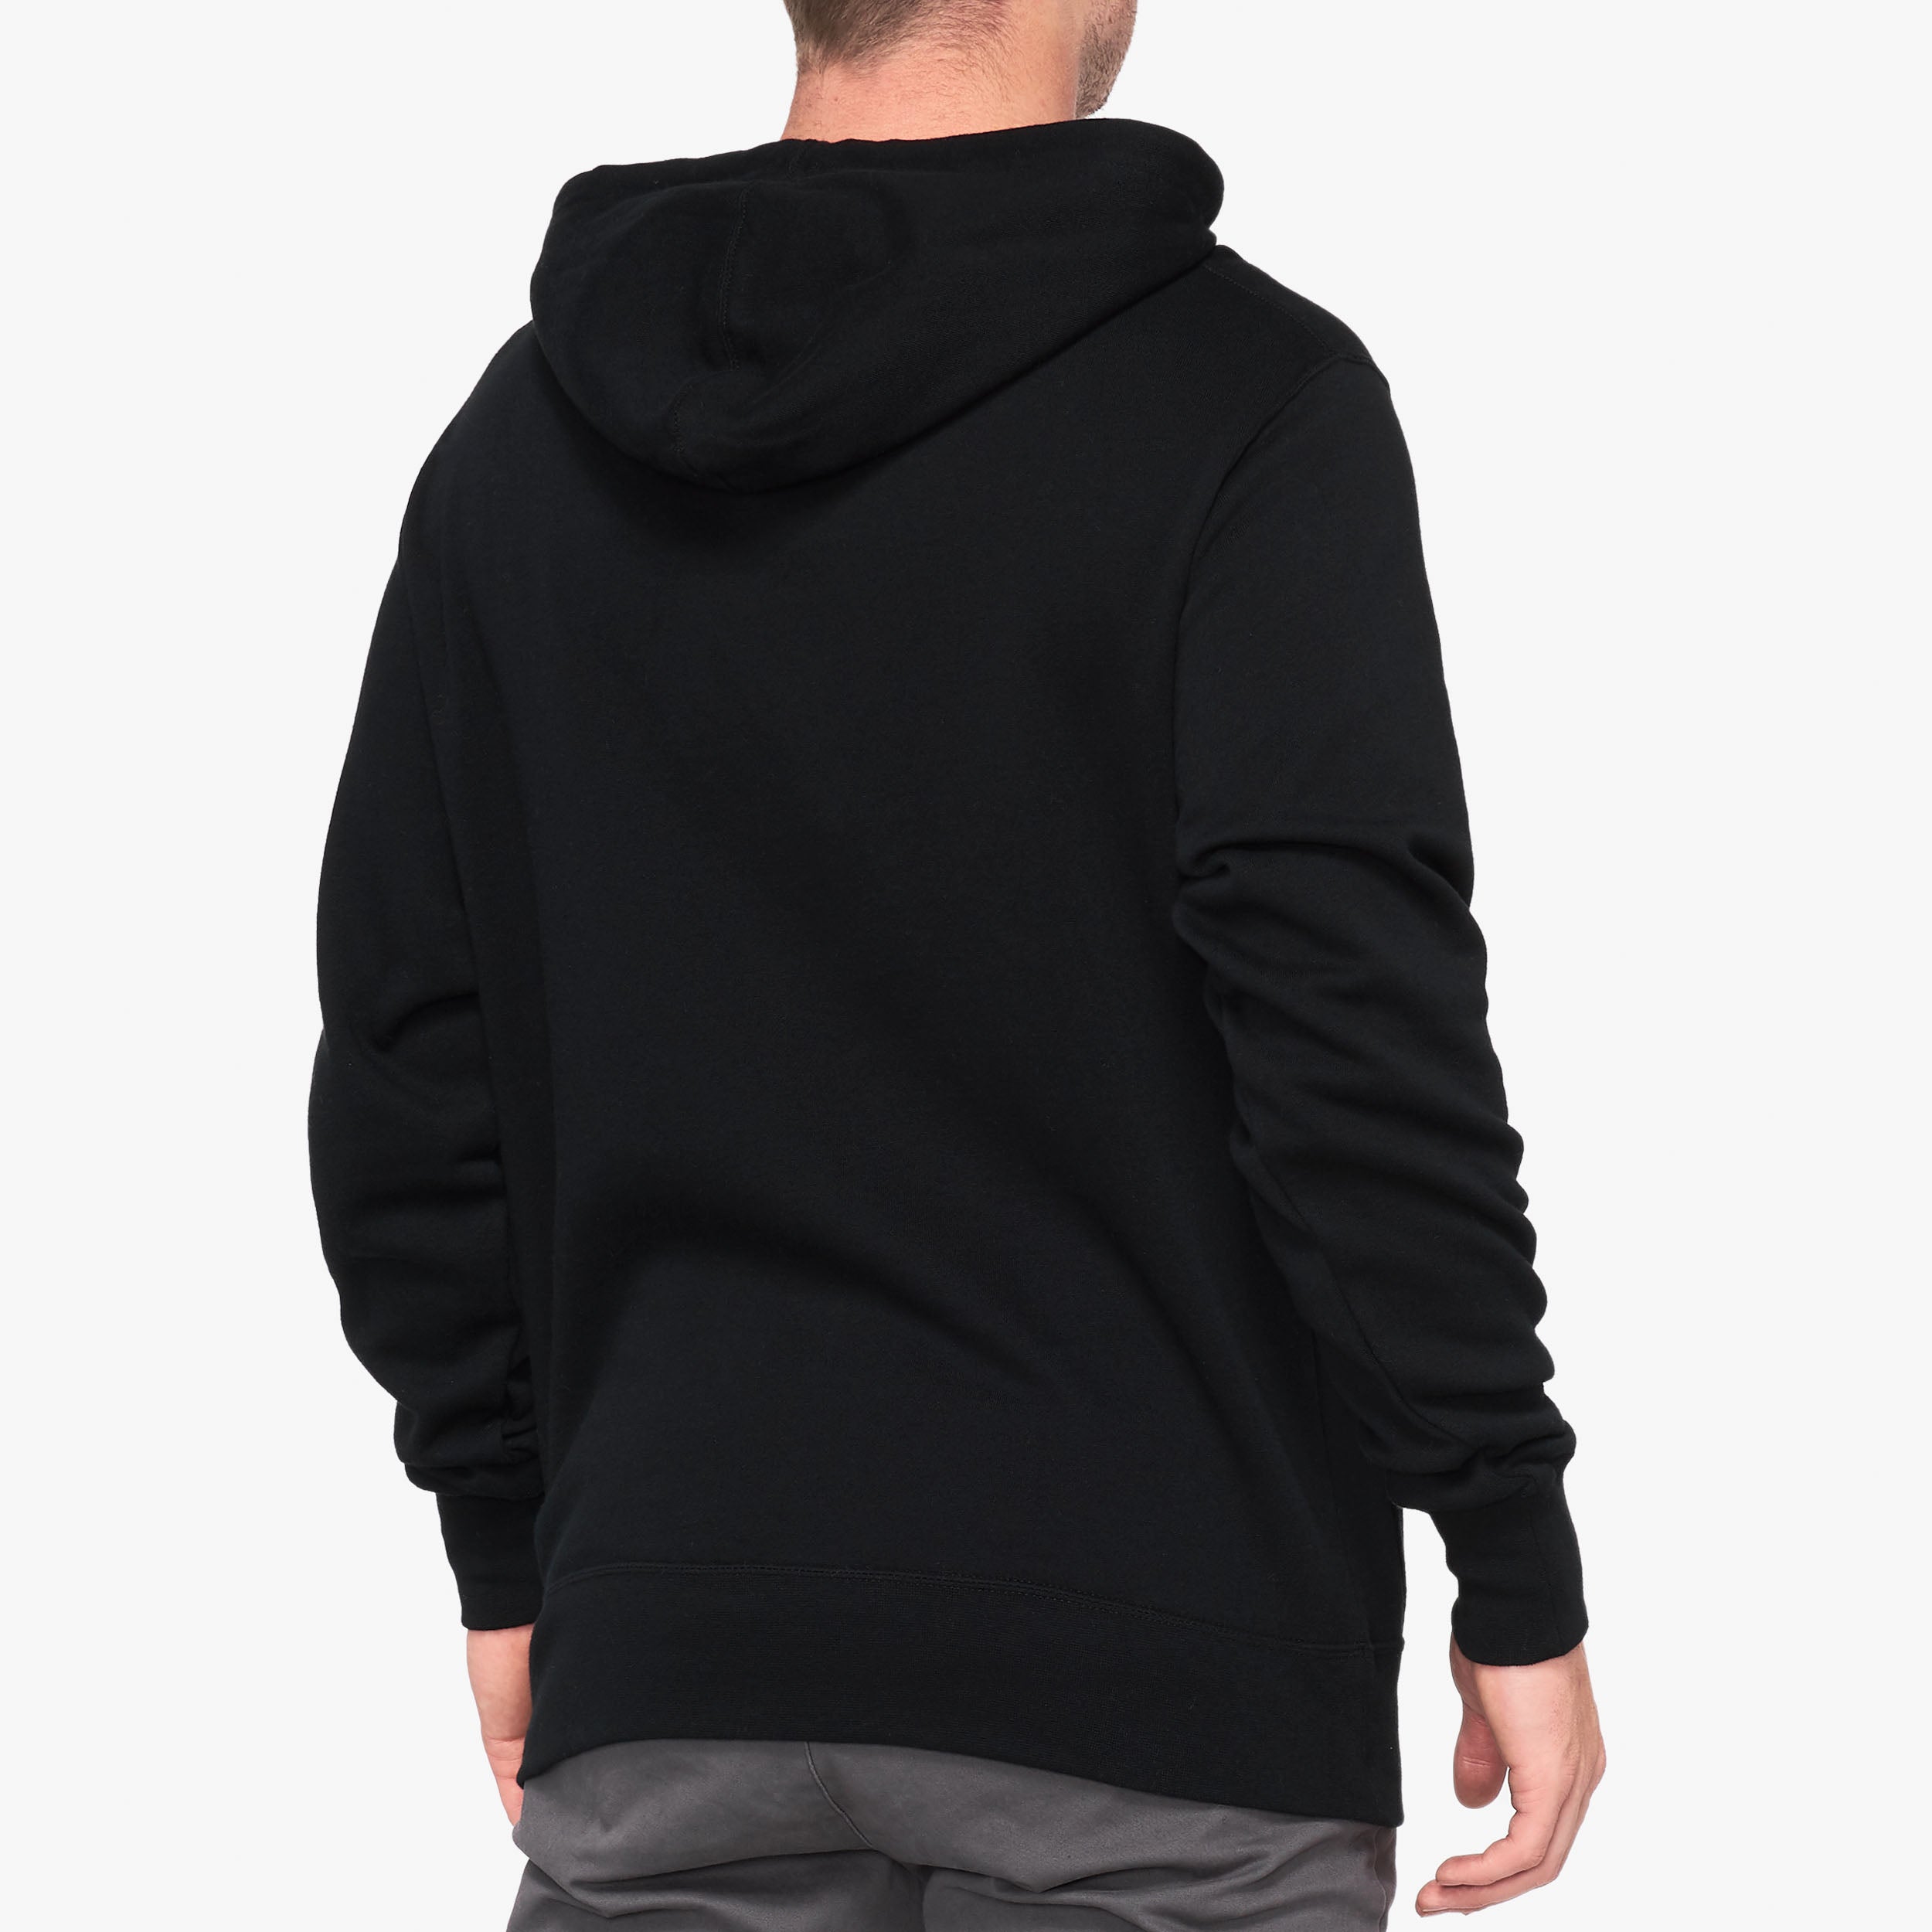 ESSENTIAL Hooded Sweatshirt - Black - Secondary